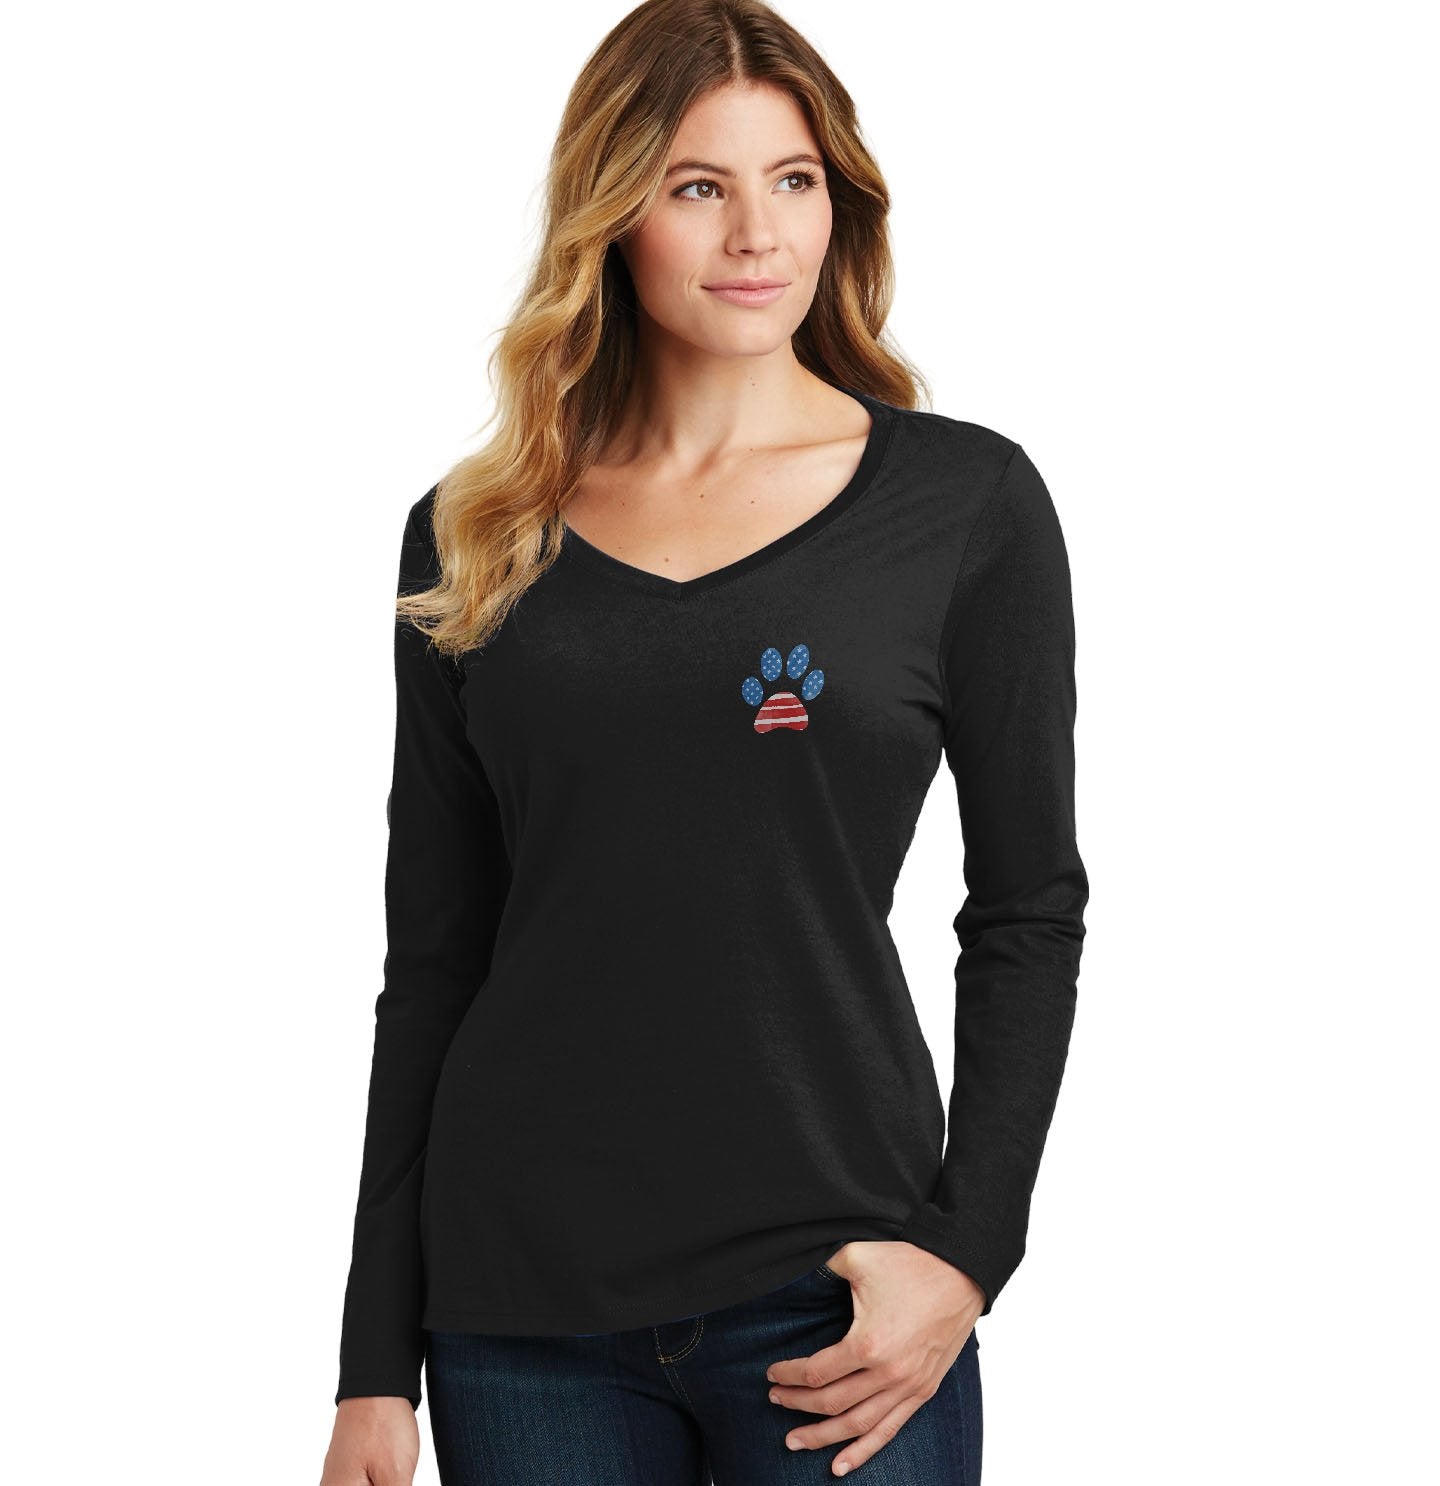 Pawtriotic Pawprint - Women's V-Neck Long Sleeve T-Shirt